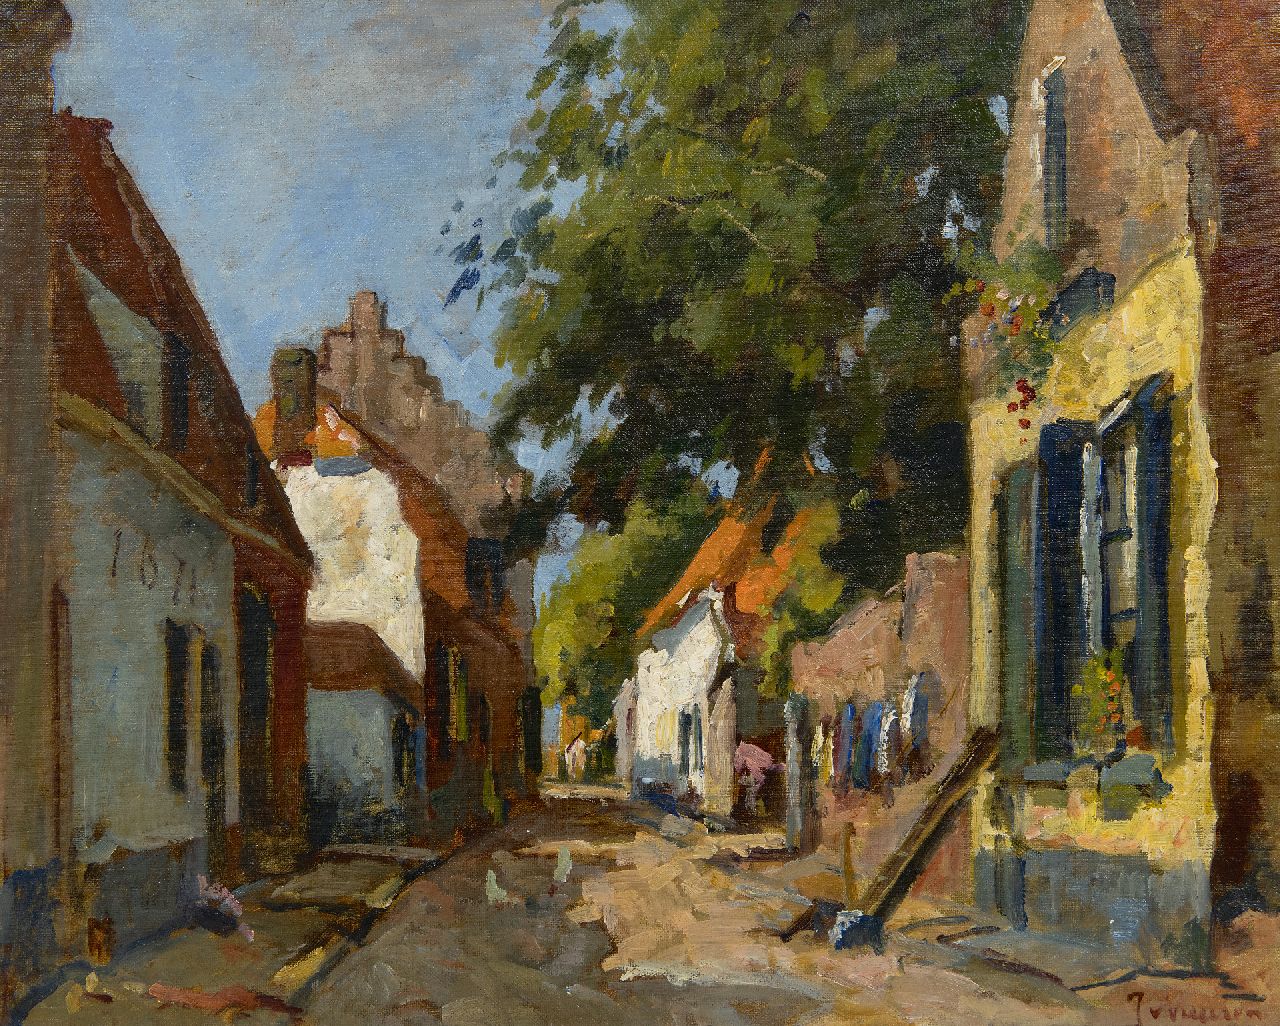 Vuuren J. van | Jan van Vuuren | Paintings offered for sale | Sunny village street, oil on canvas 40.0 x 50.1 cm, signed l.r.